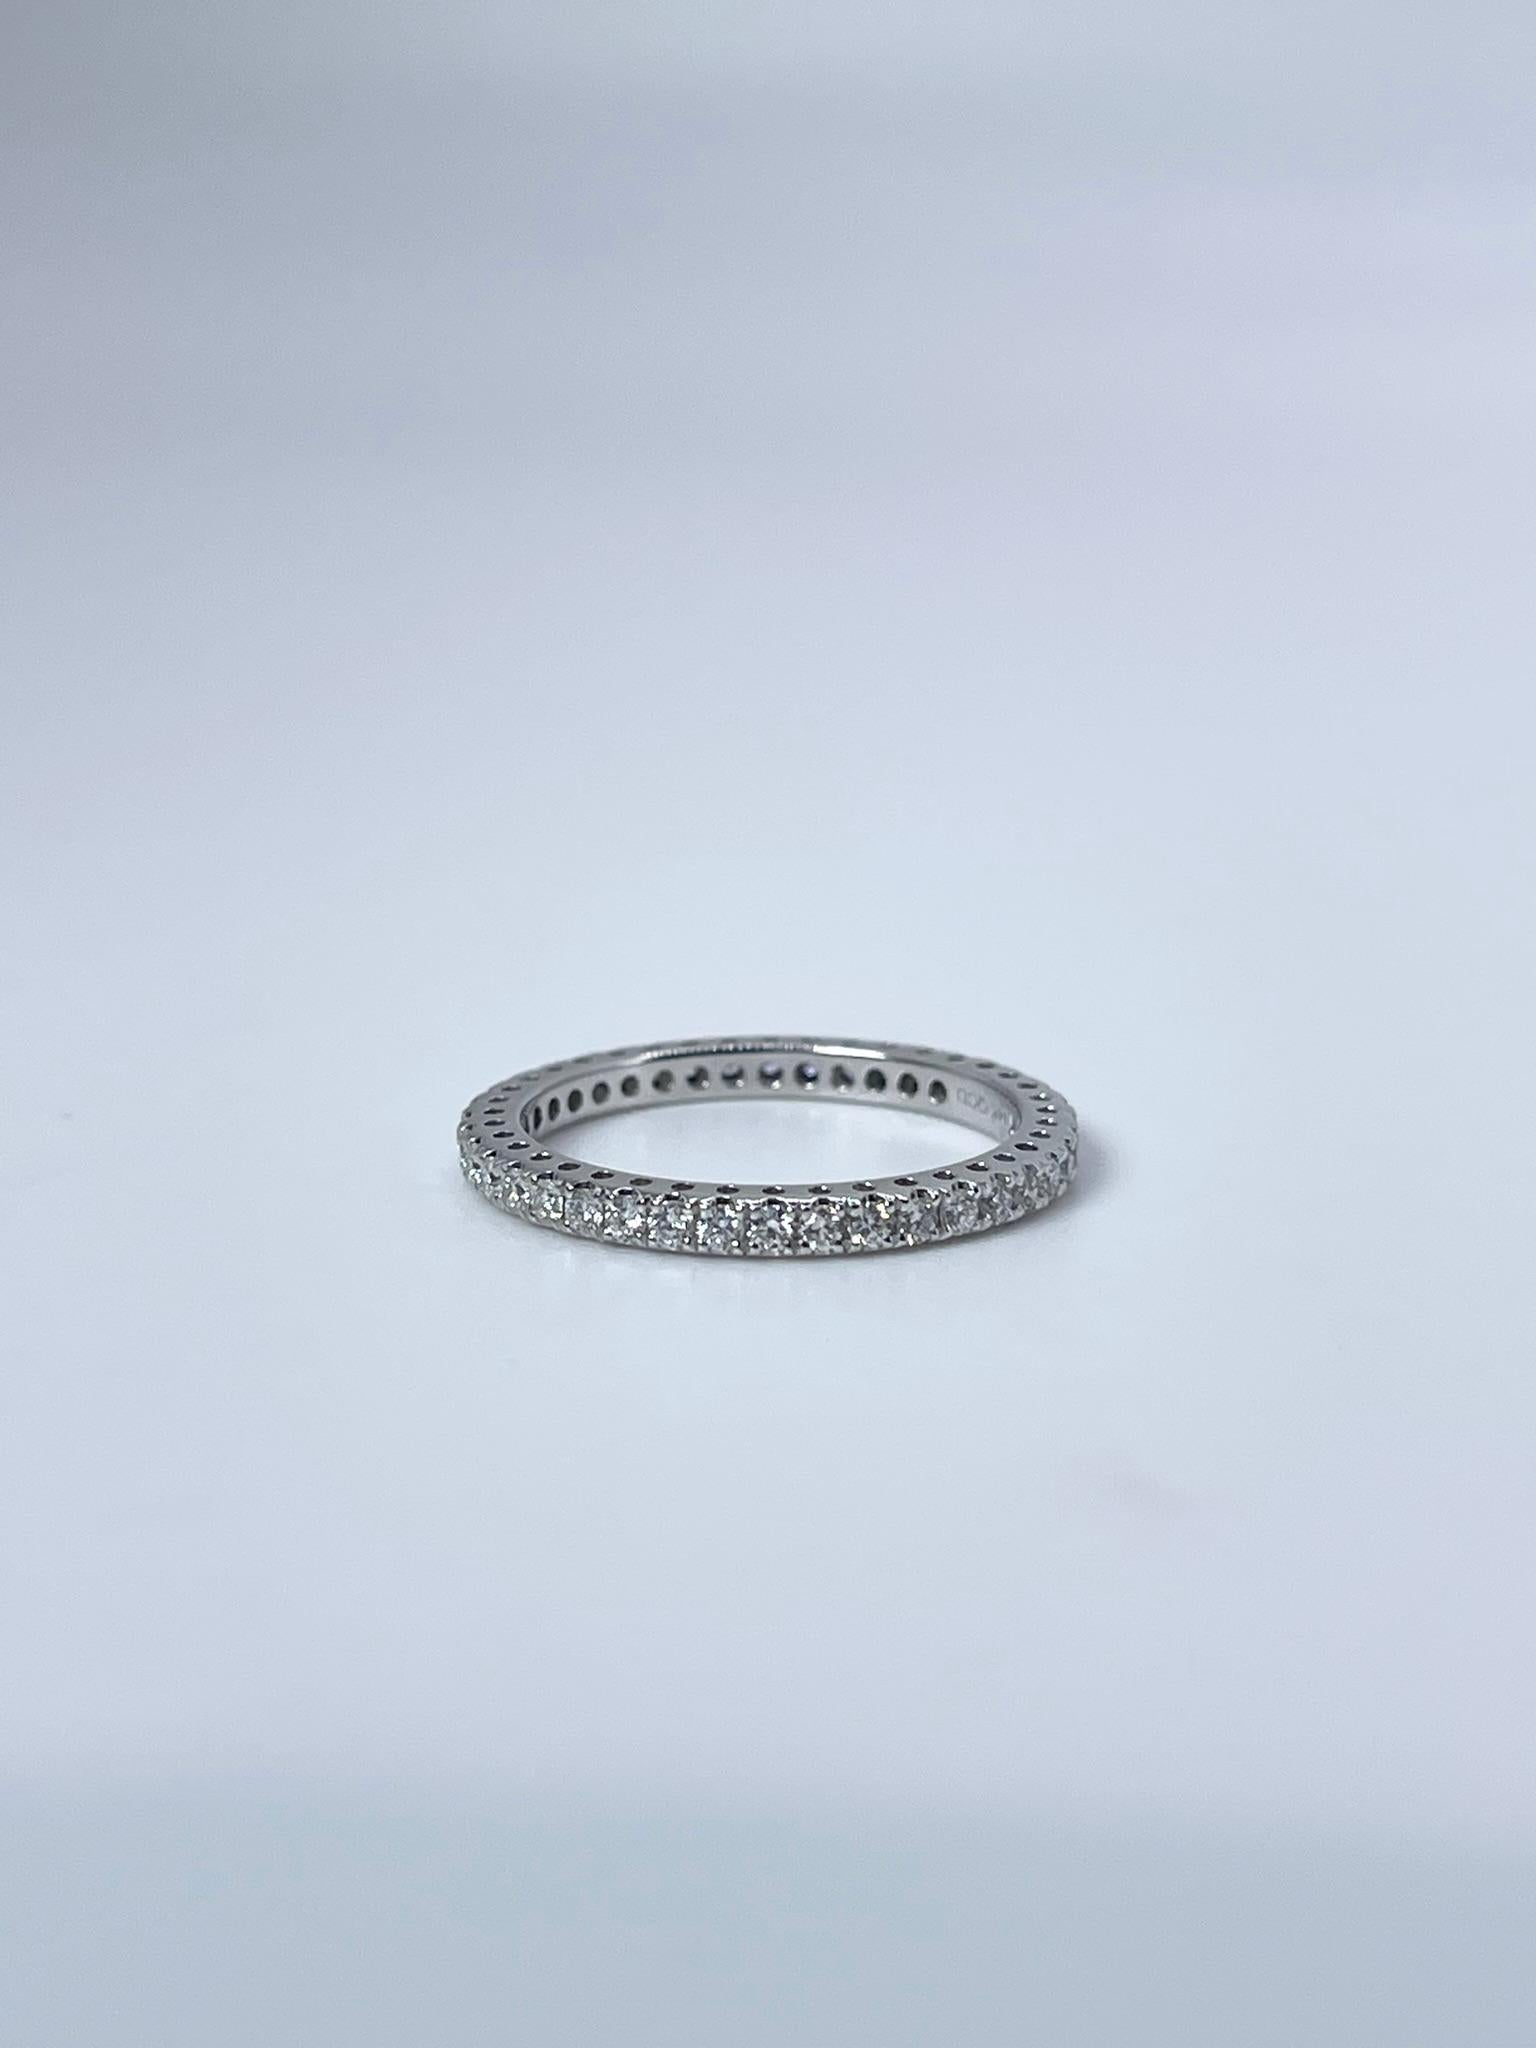 Modernist Eternity diamond ring 14KT white gold Elegant Marriage ring 0.59ct natural dia For Sale